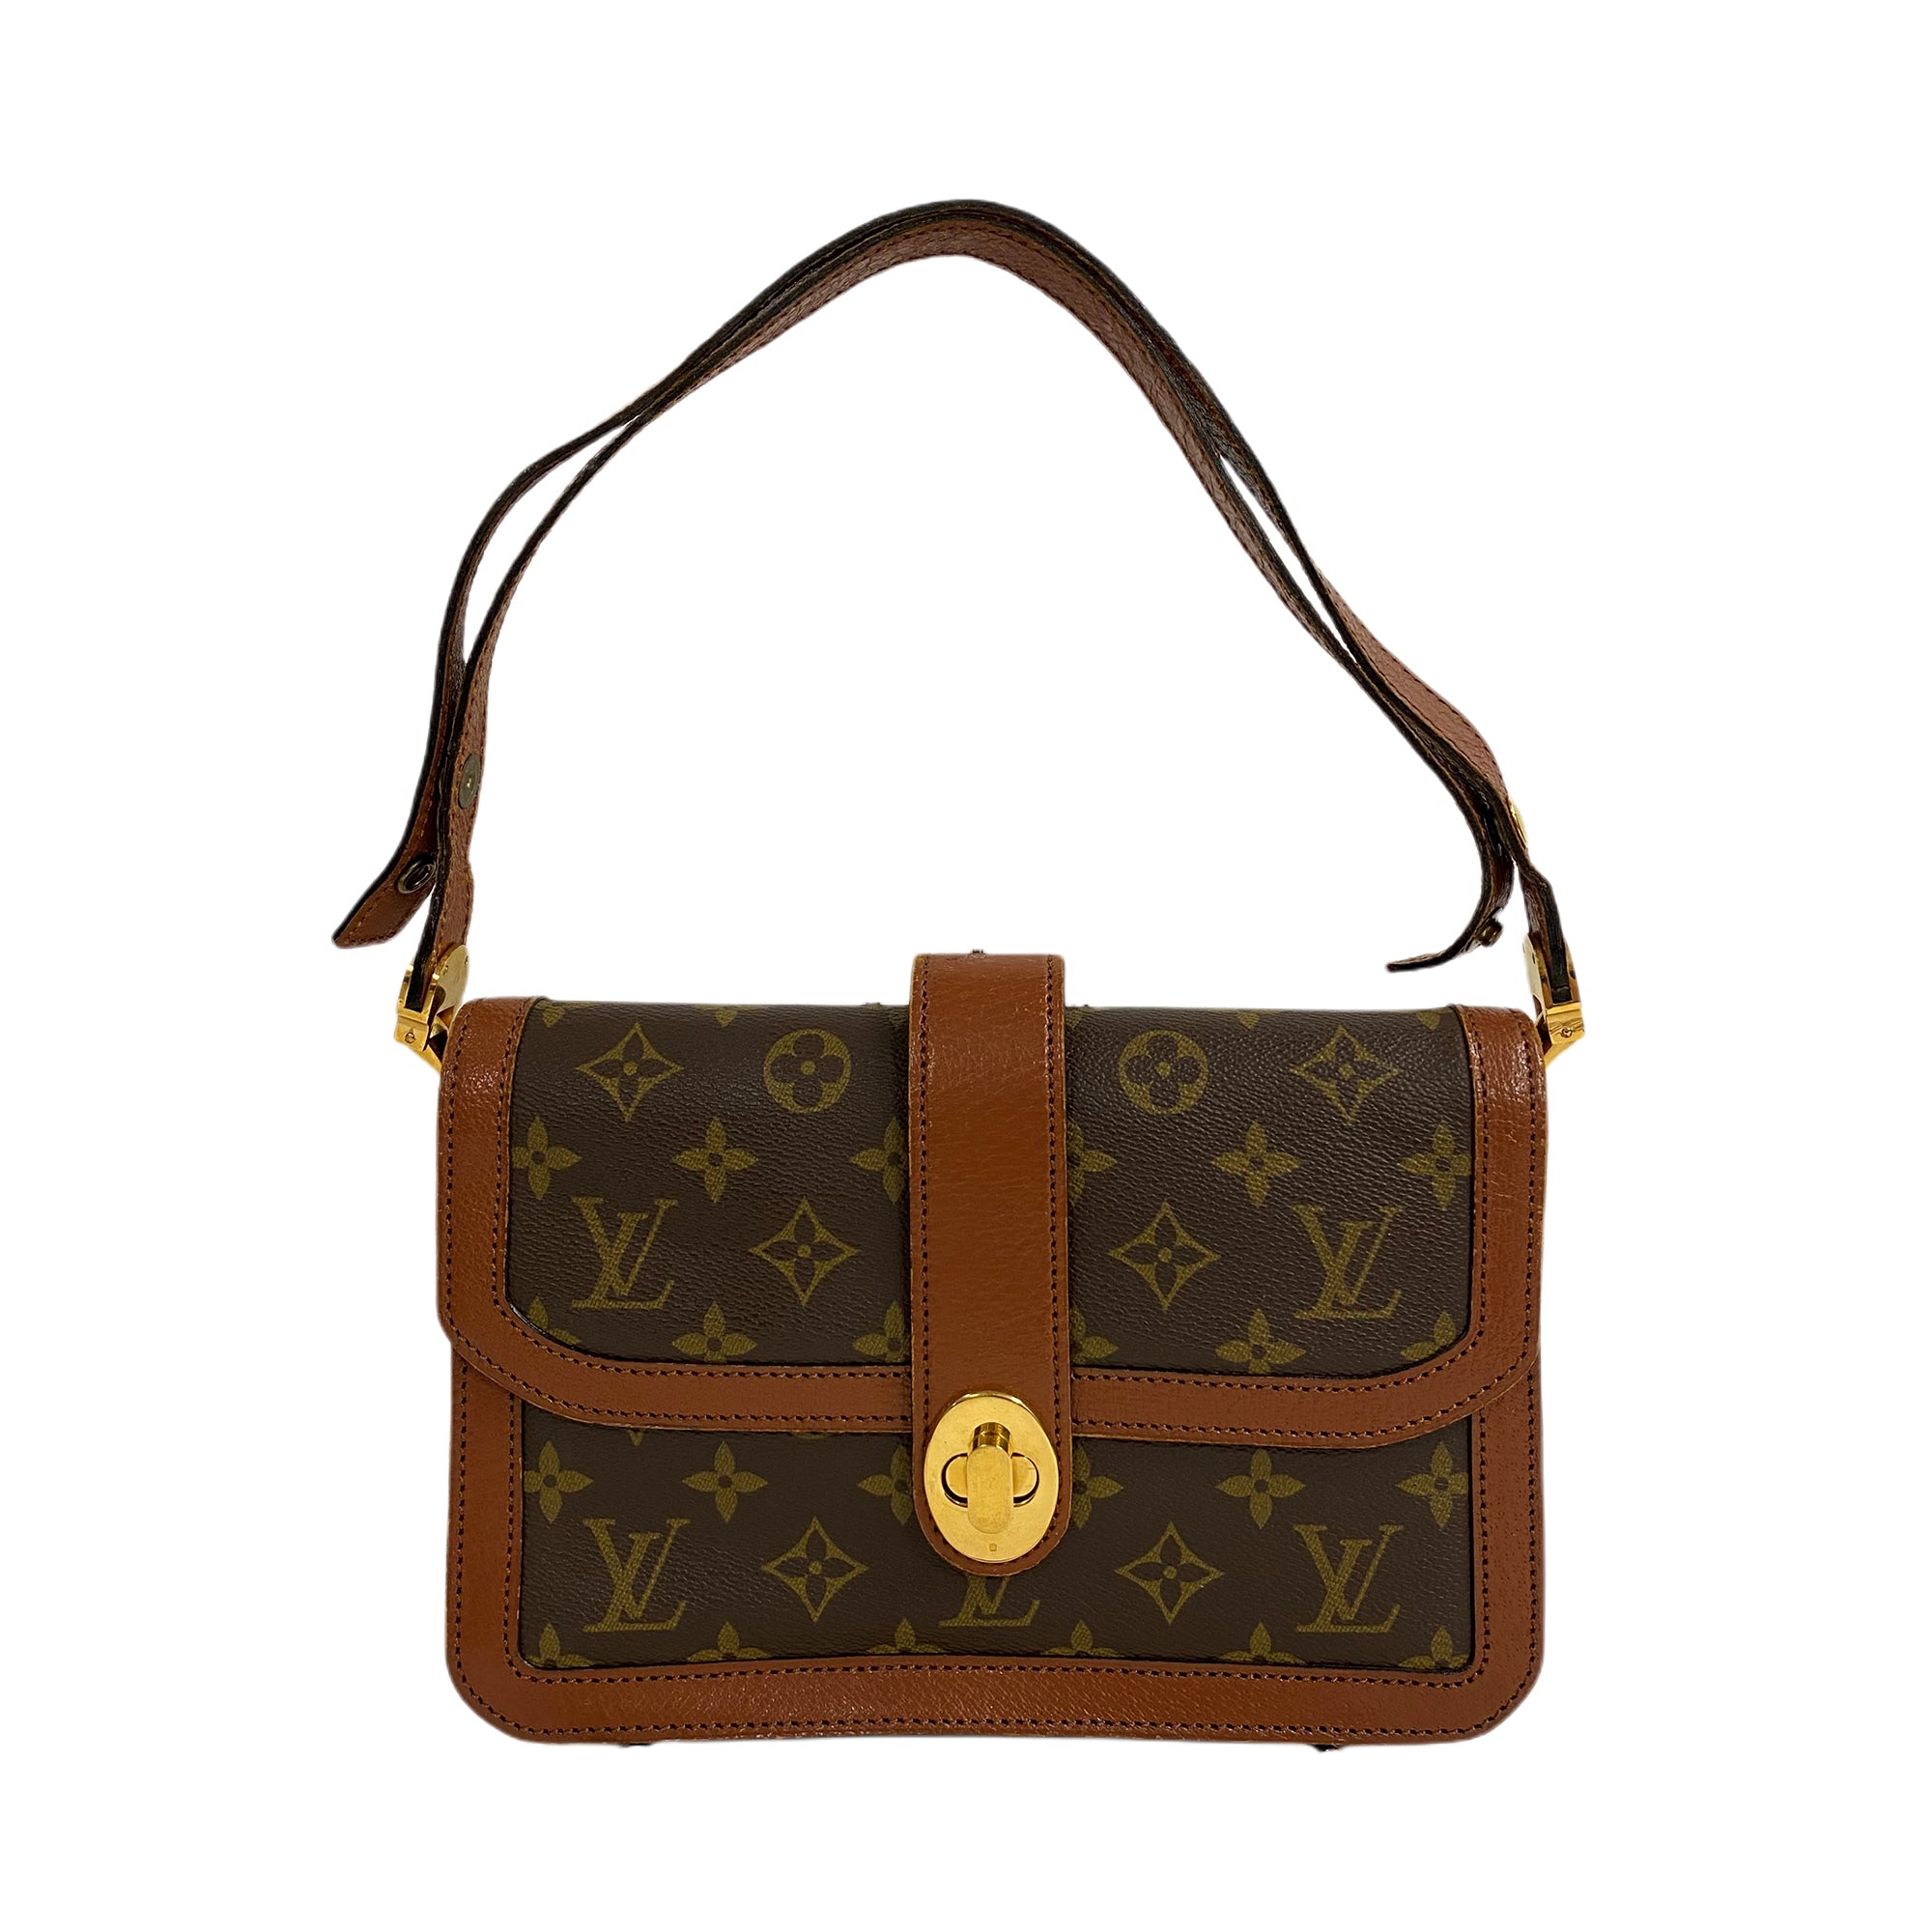 Vintage Louis Vuitton Sac Vendome No.233 Monogram LV Hand Bag